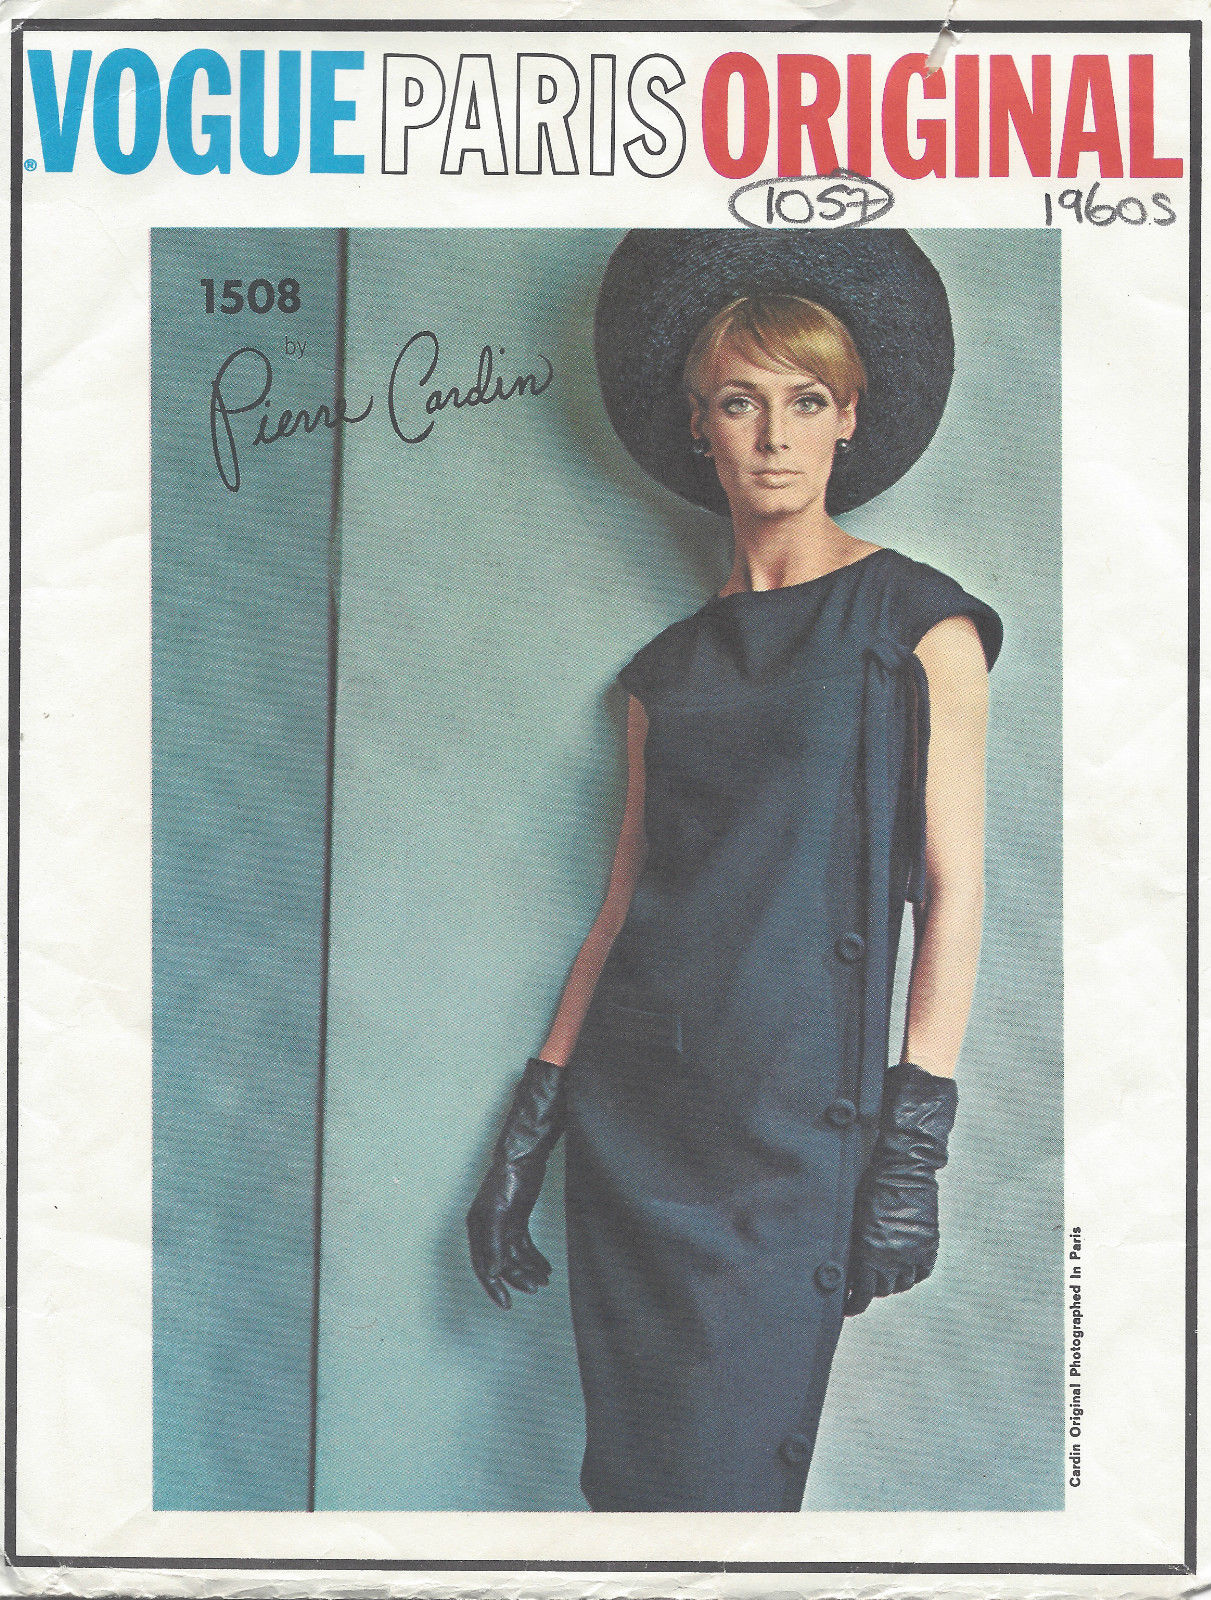 Vogue by Pierre Cardin Archives - The Vintage Pattern Shop